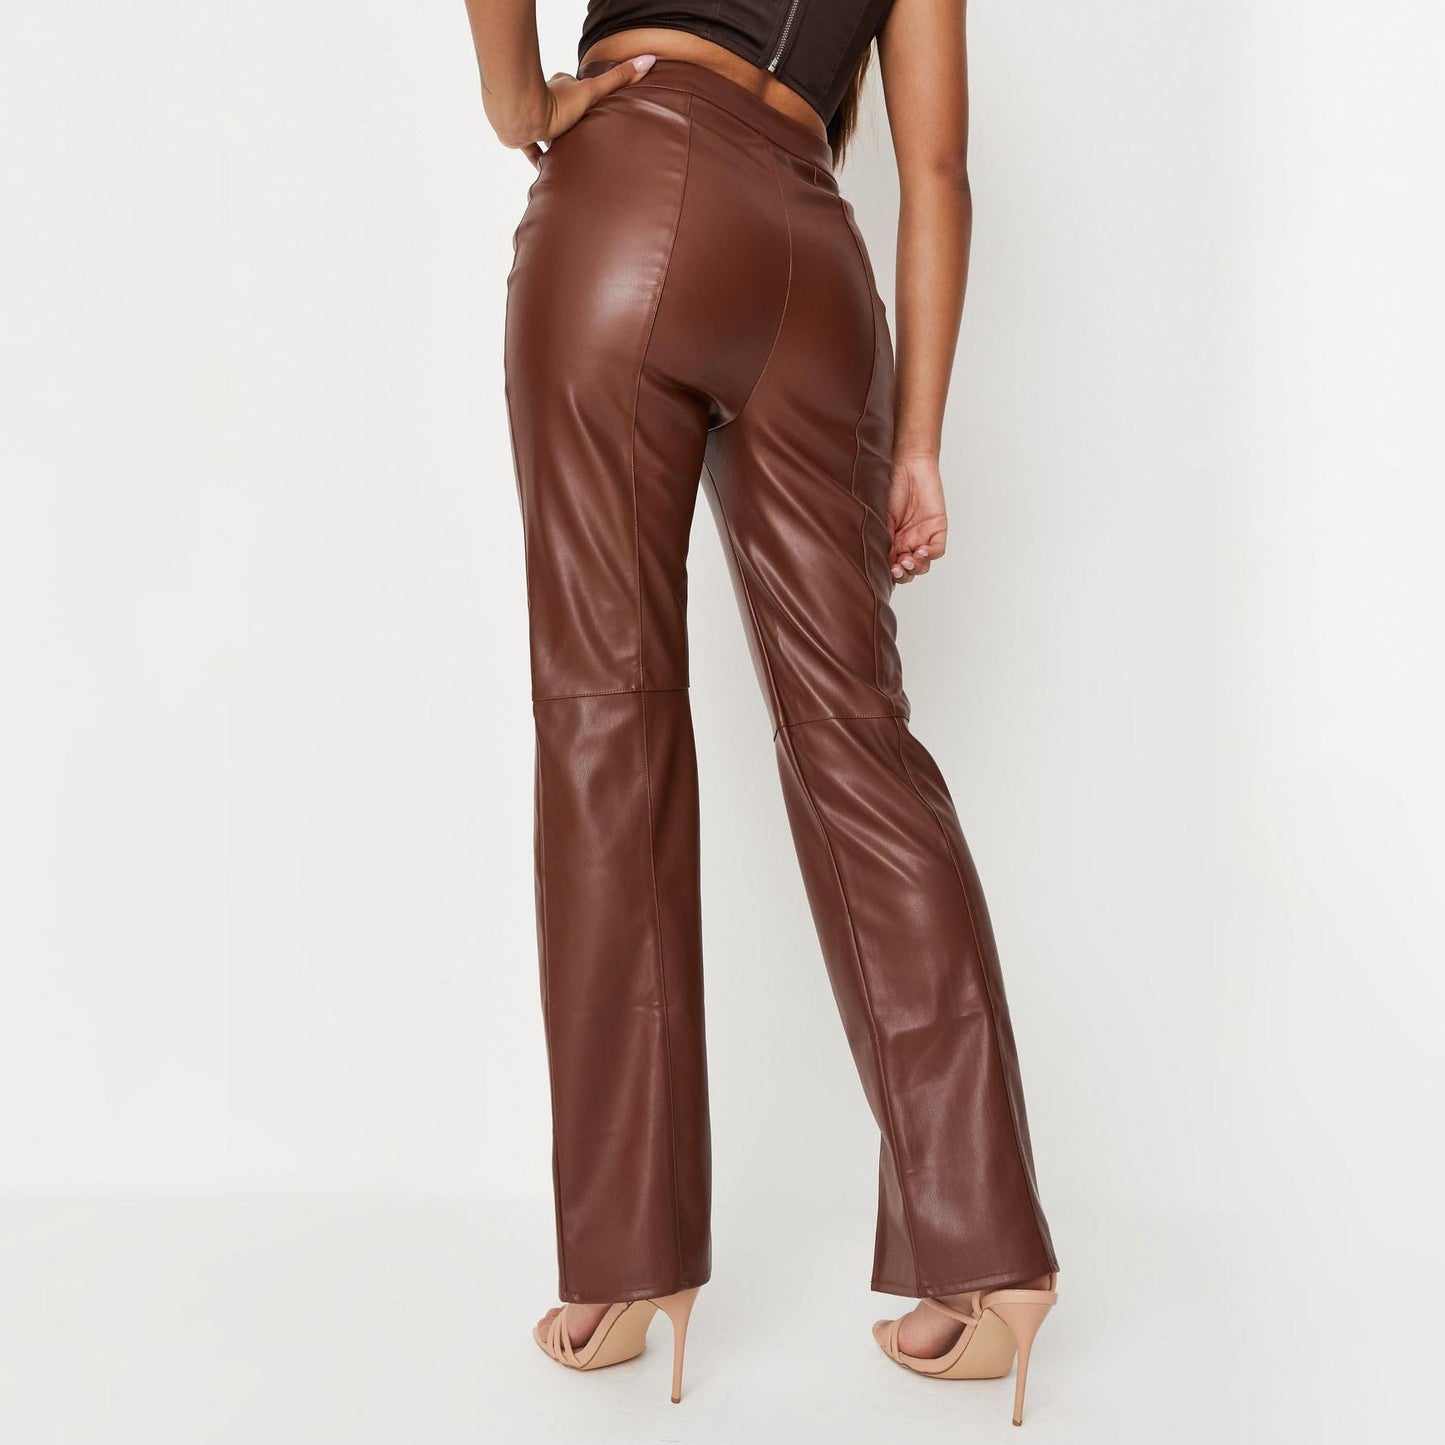 Arinive Leather Pants